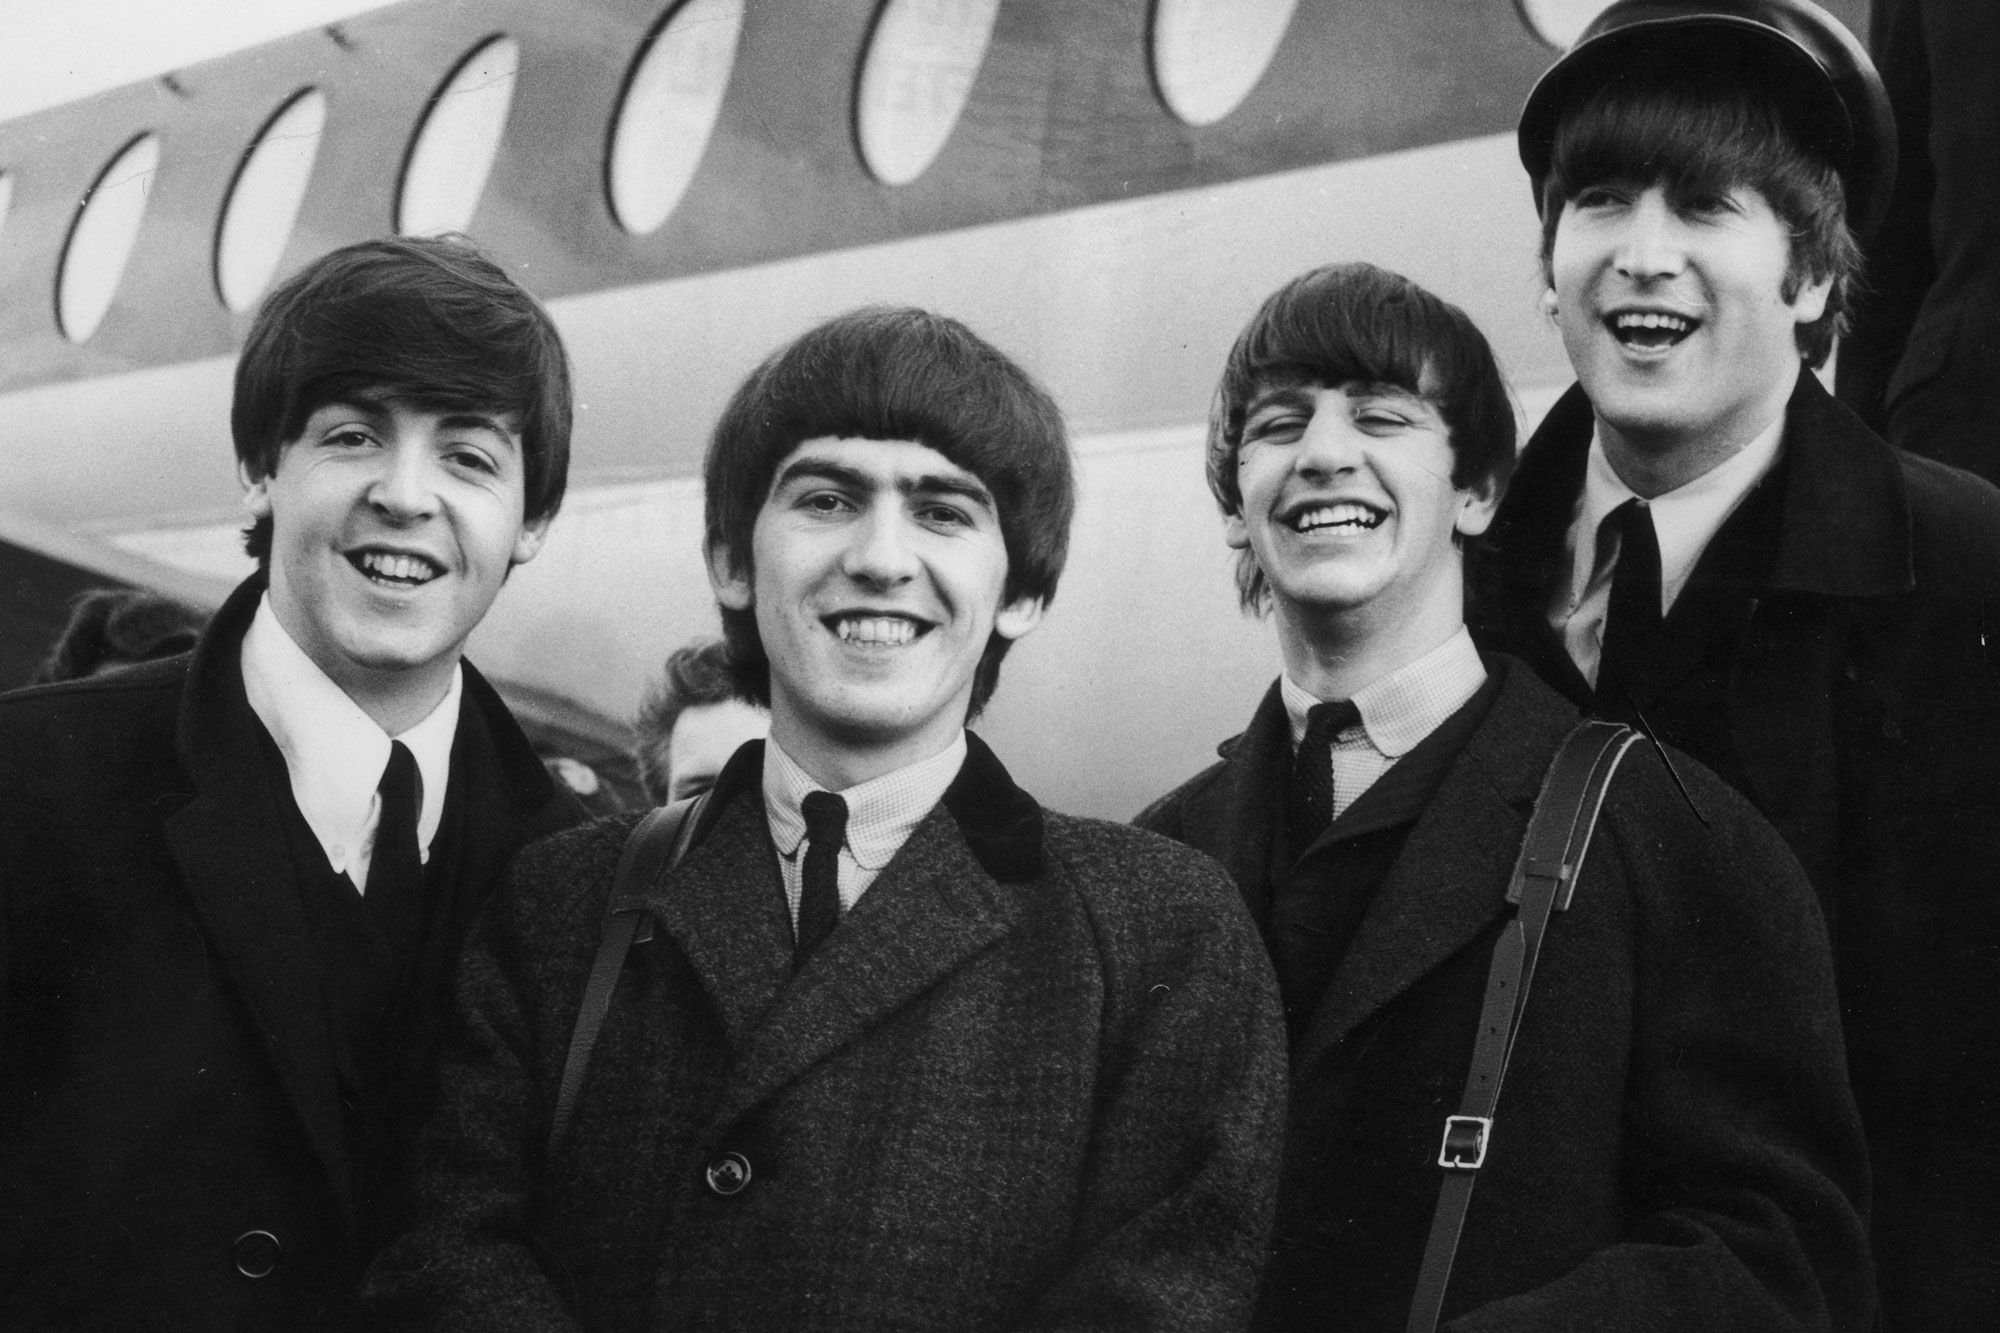 The Beatles stay a popular culture phenomenon even amongst Gen Z followers